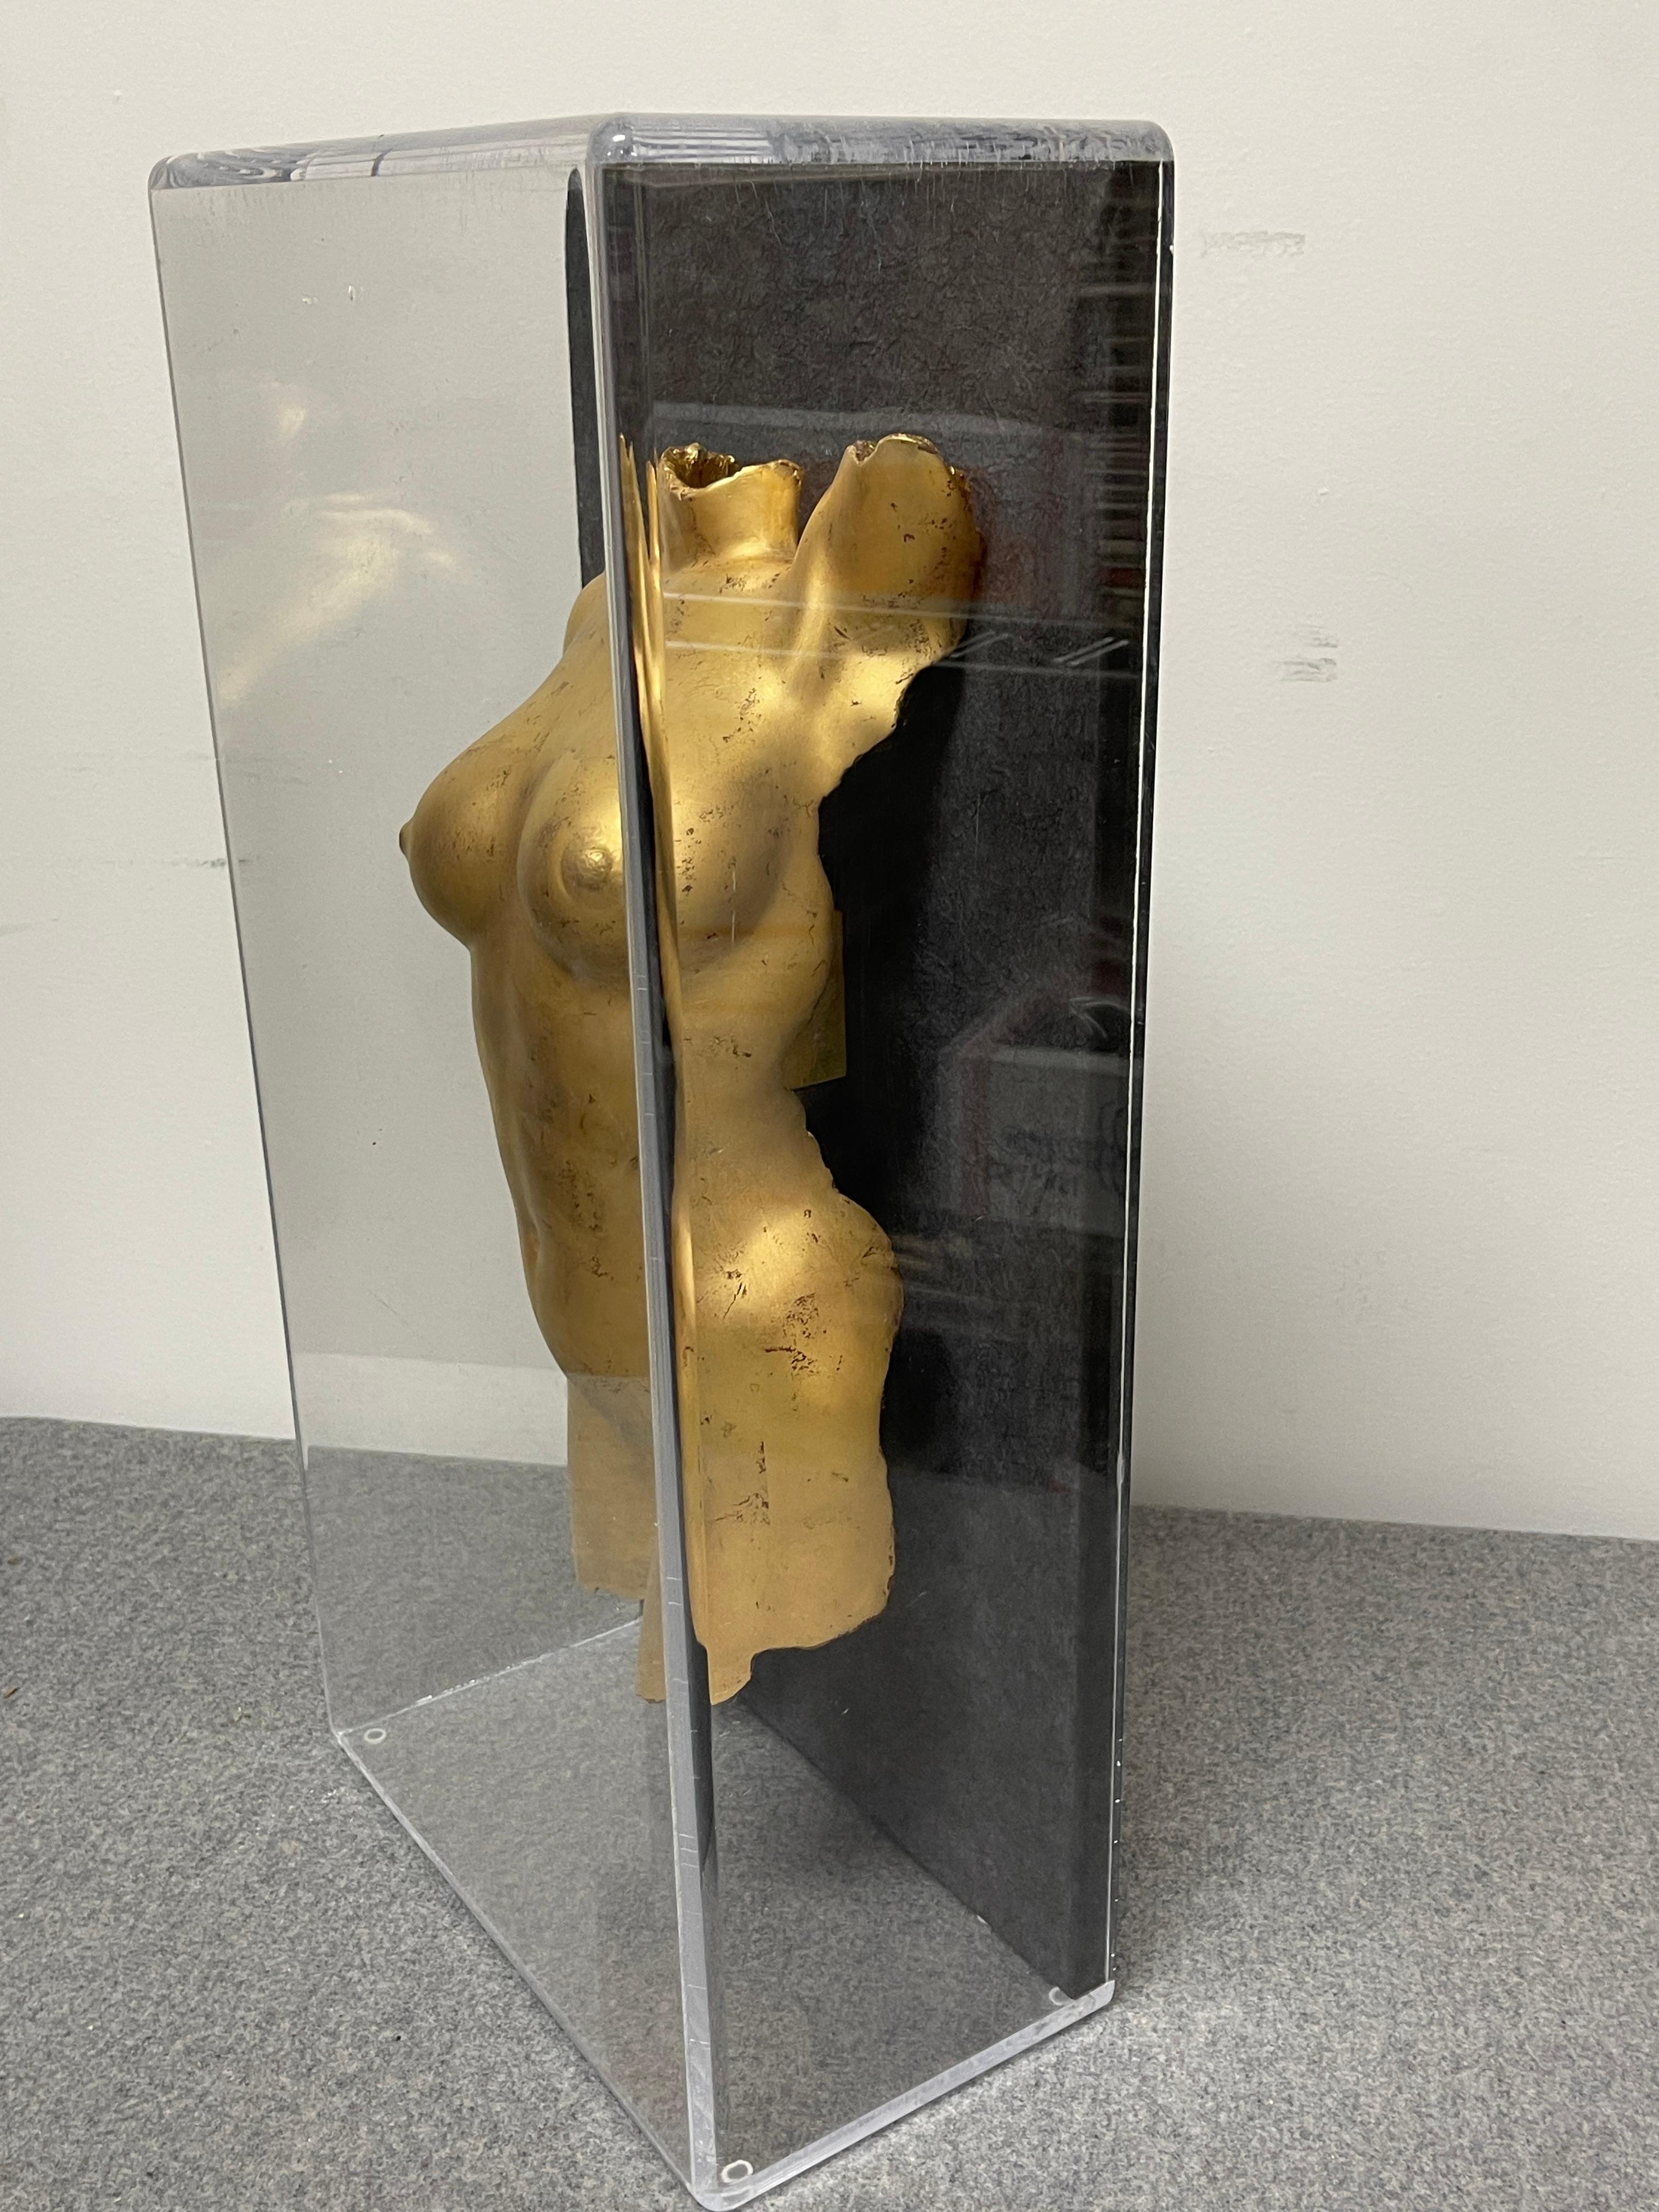 Marilyn Monroe Bust Torso Sculpture in Case